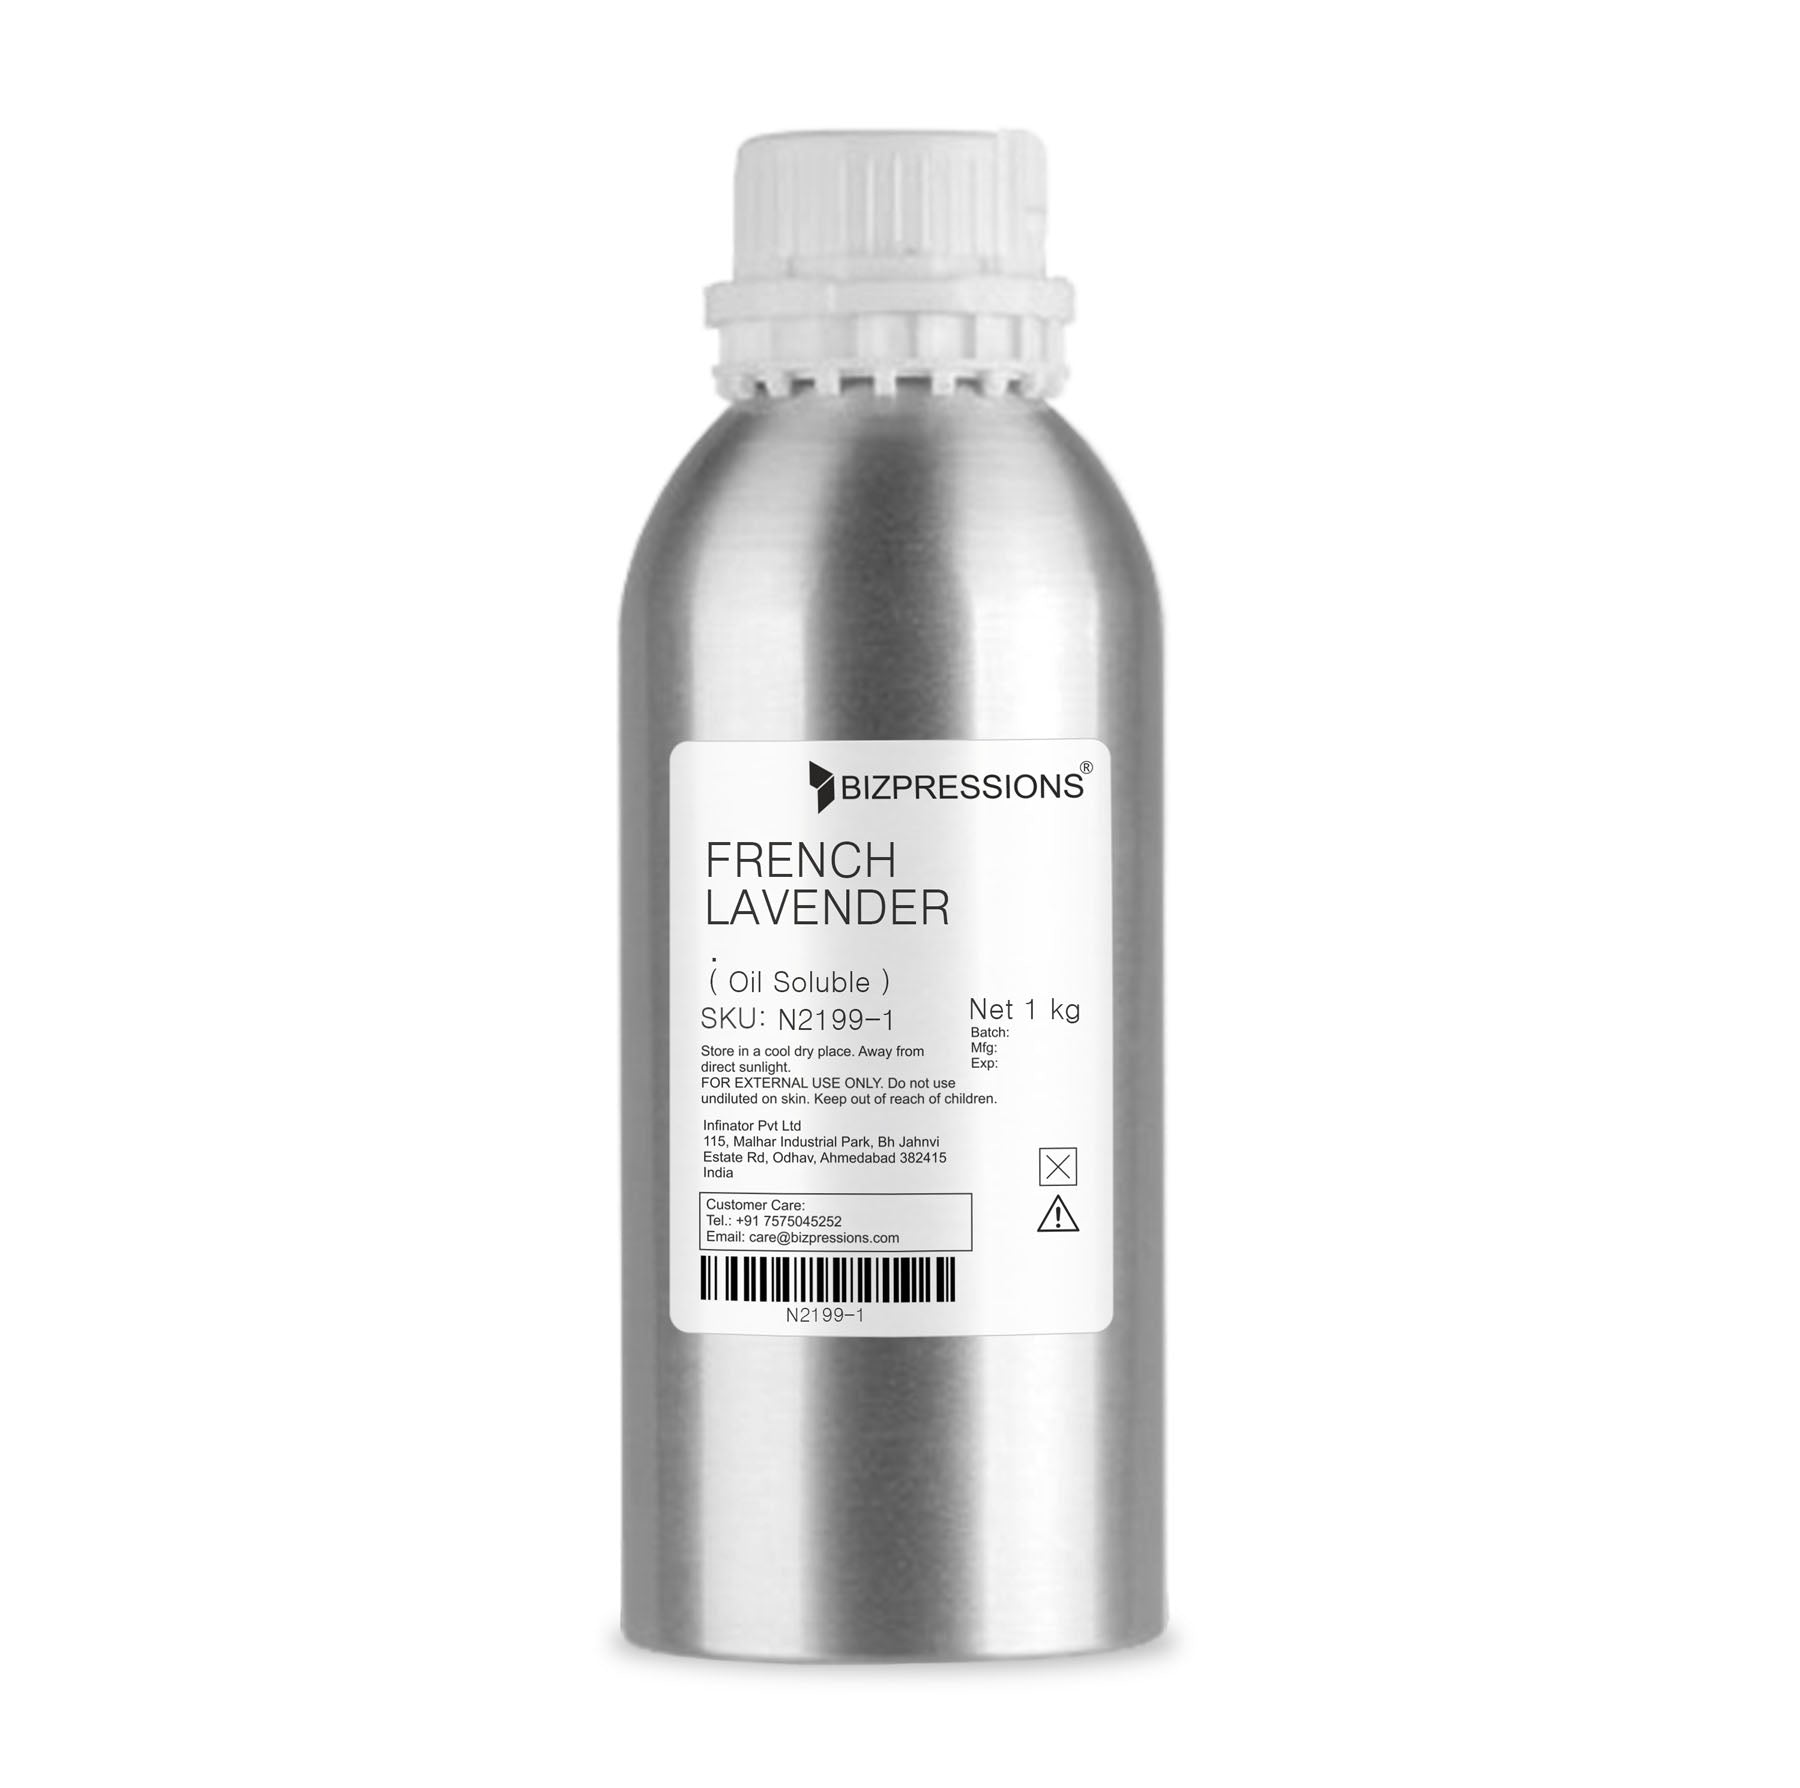 FRENCH LAVENDER - Fragrance ( Oil Soluble ) - 1 kg